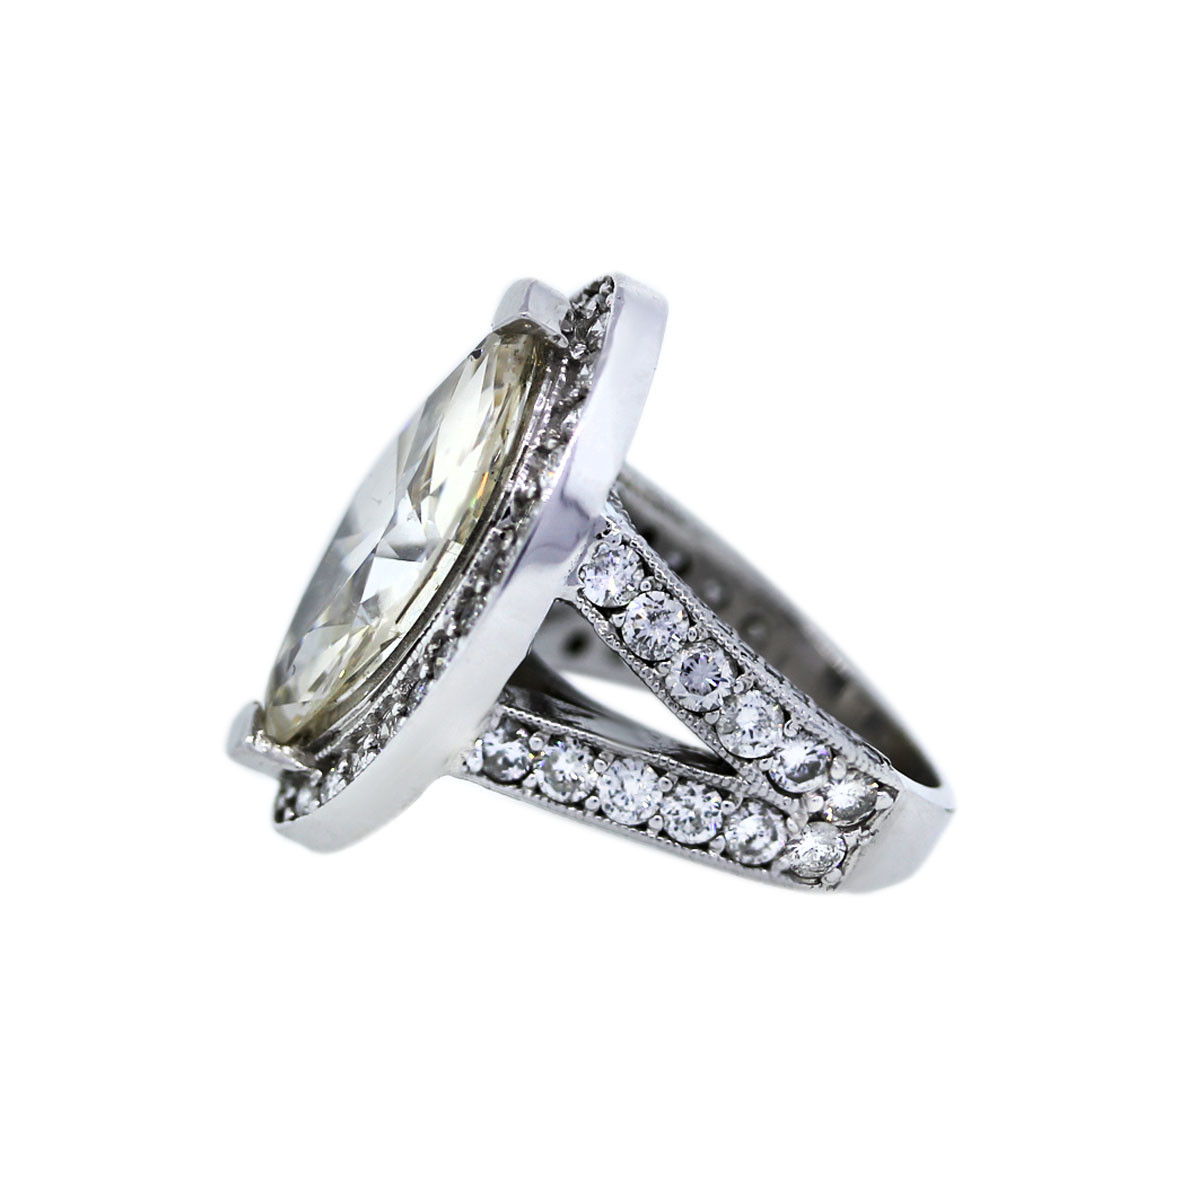 Marquise Diamond Engagement Ring
 14k White Gold 7 20ct Marquise Diamond Engagement Ring